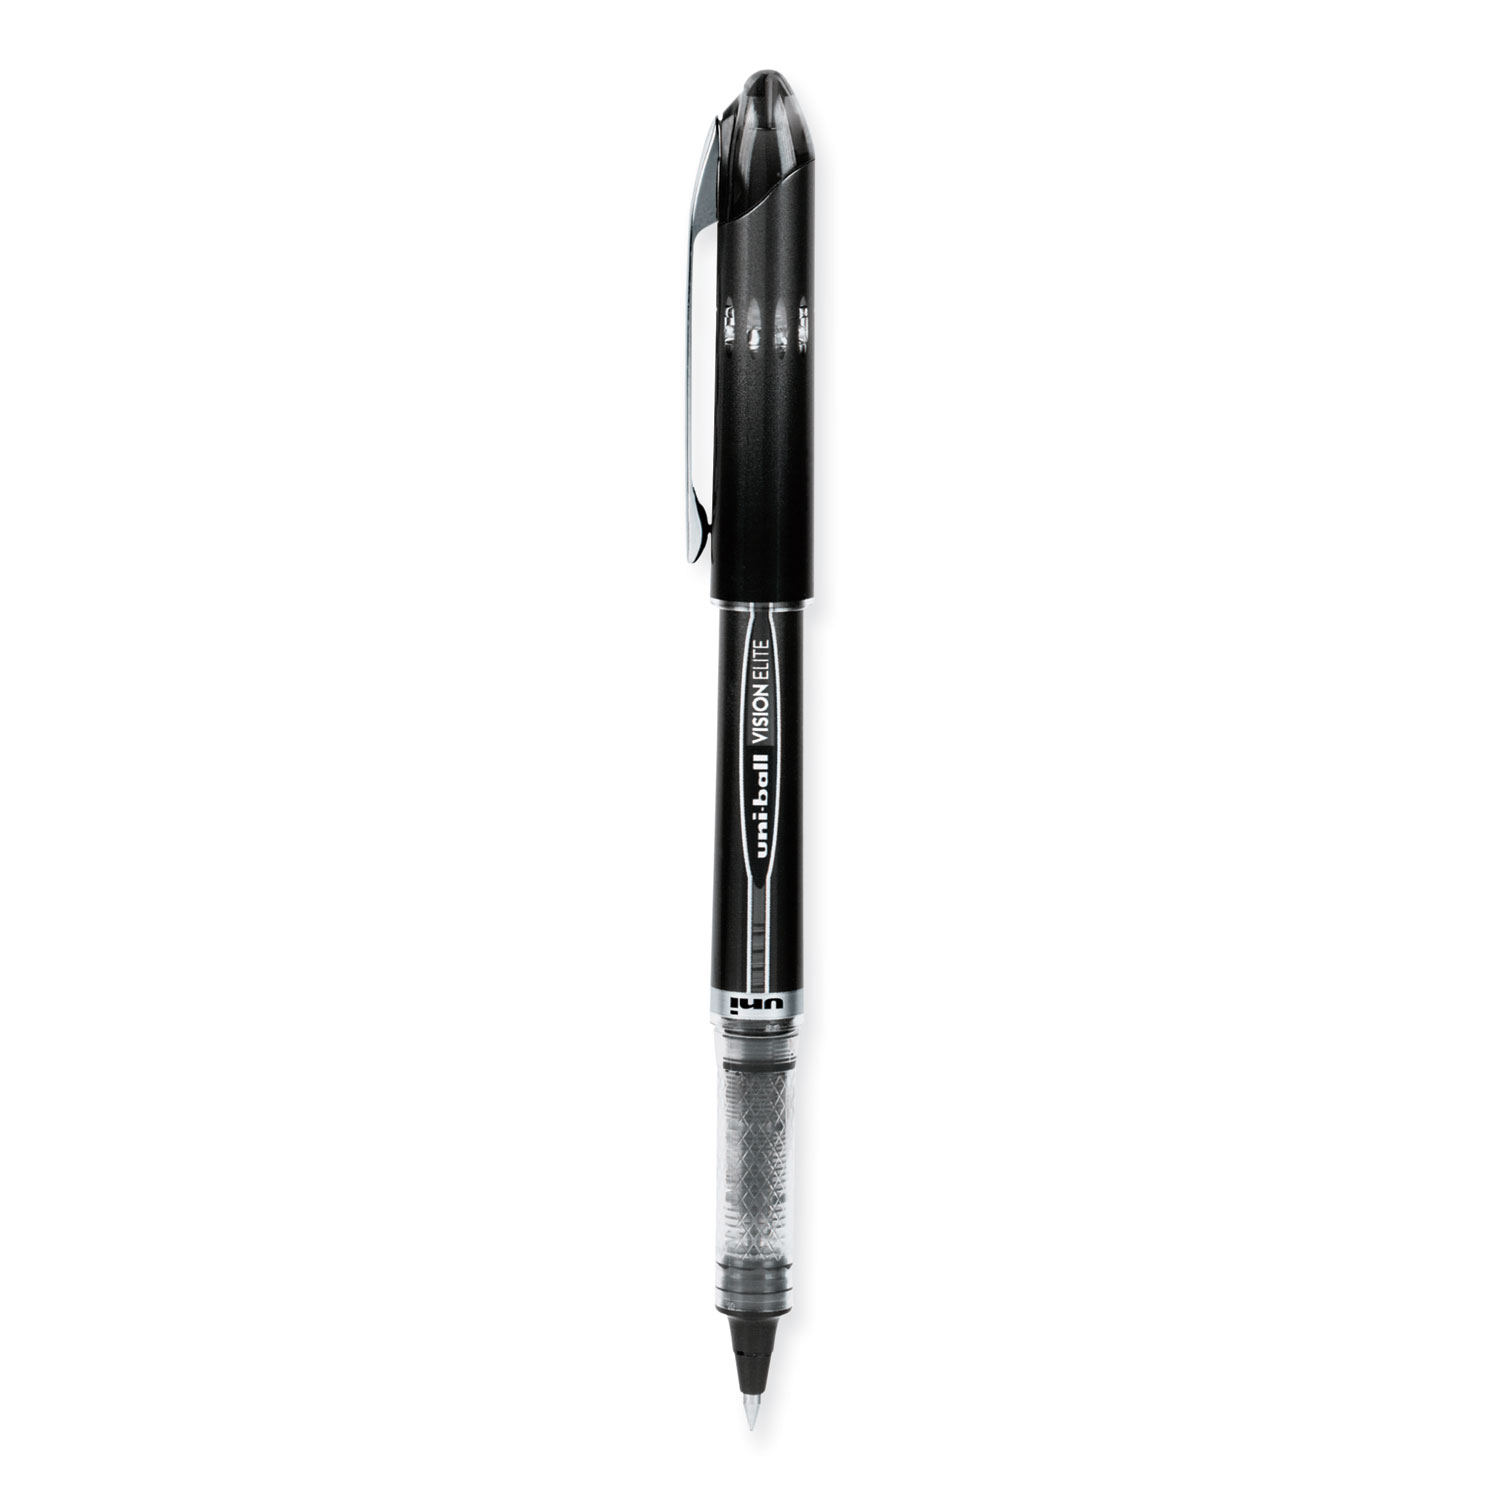 uni ball Signo Gel 207 Retractable Gel Pens Medium Point 0.7 mm Clear  Barrels Black Ink Pack Of 4 - Office Depot